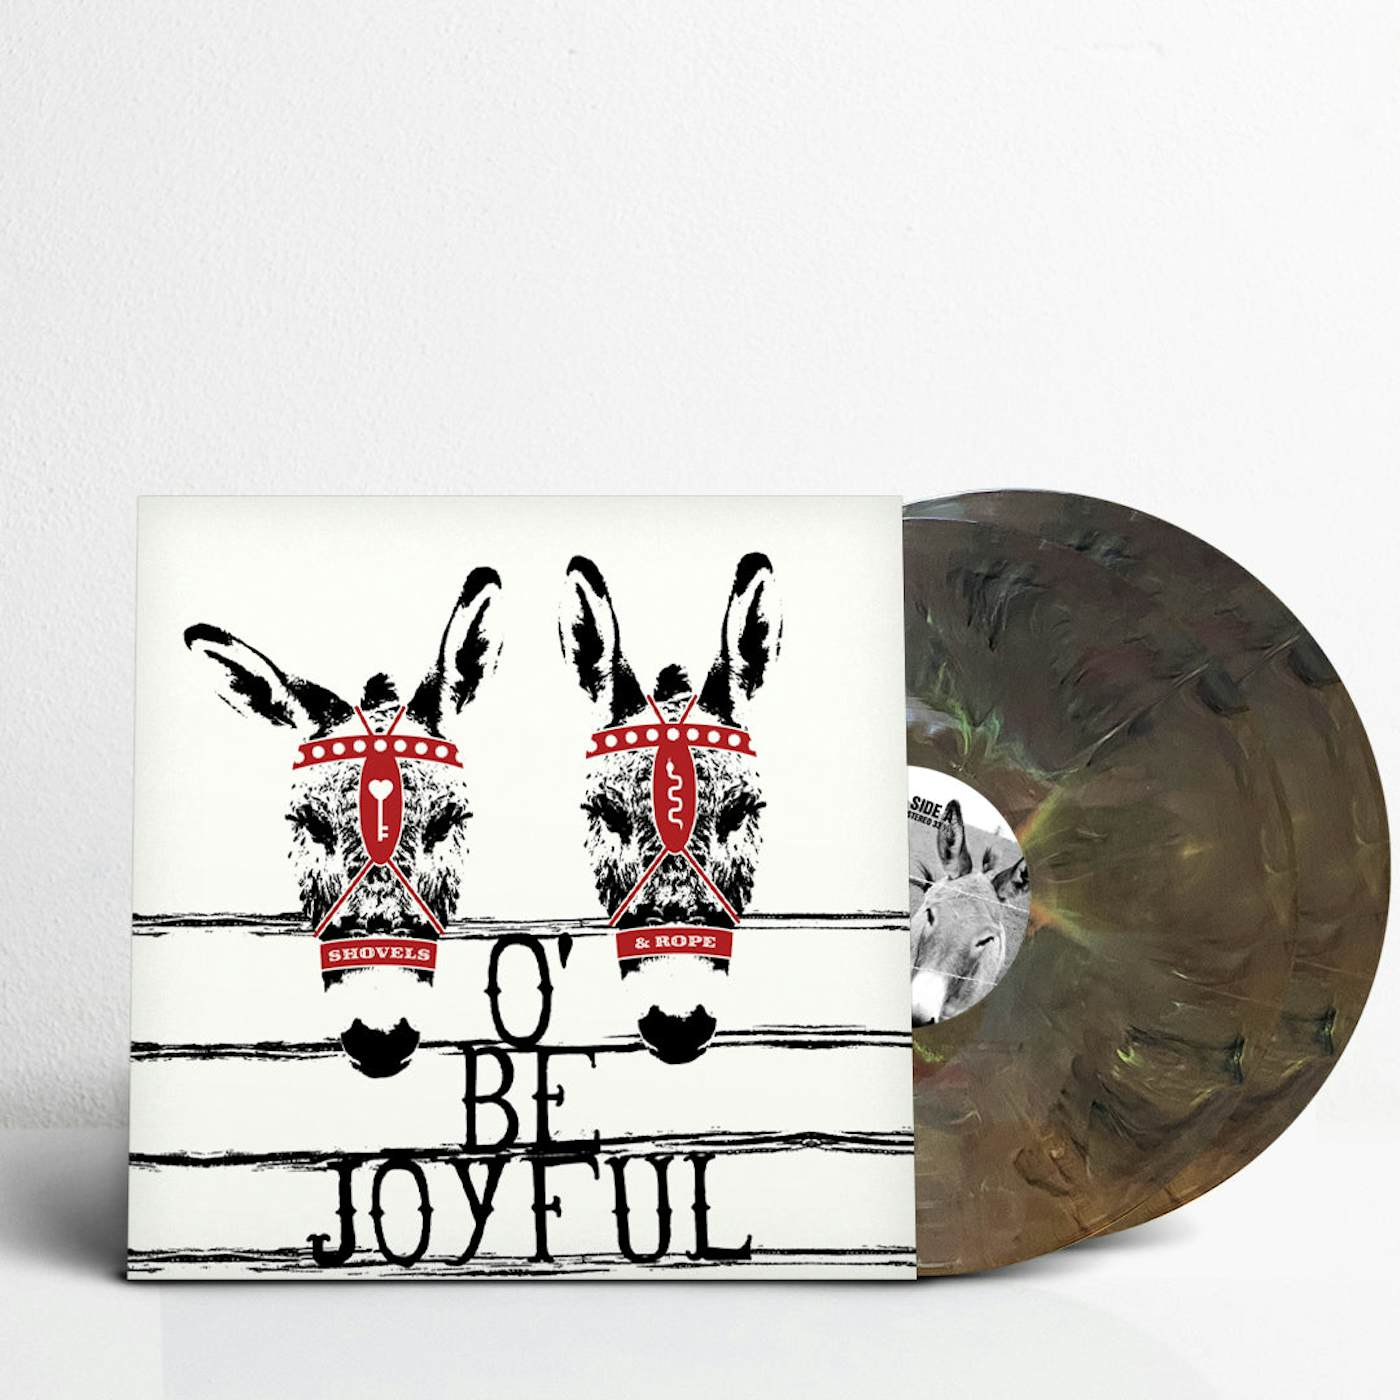 Shovels & Rope O' Be Joyful - 10th Anniversary Edition (Limited Edition Vinyl)